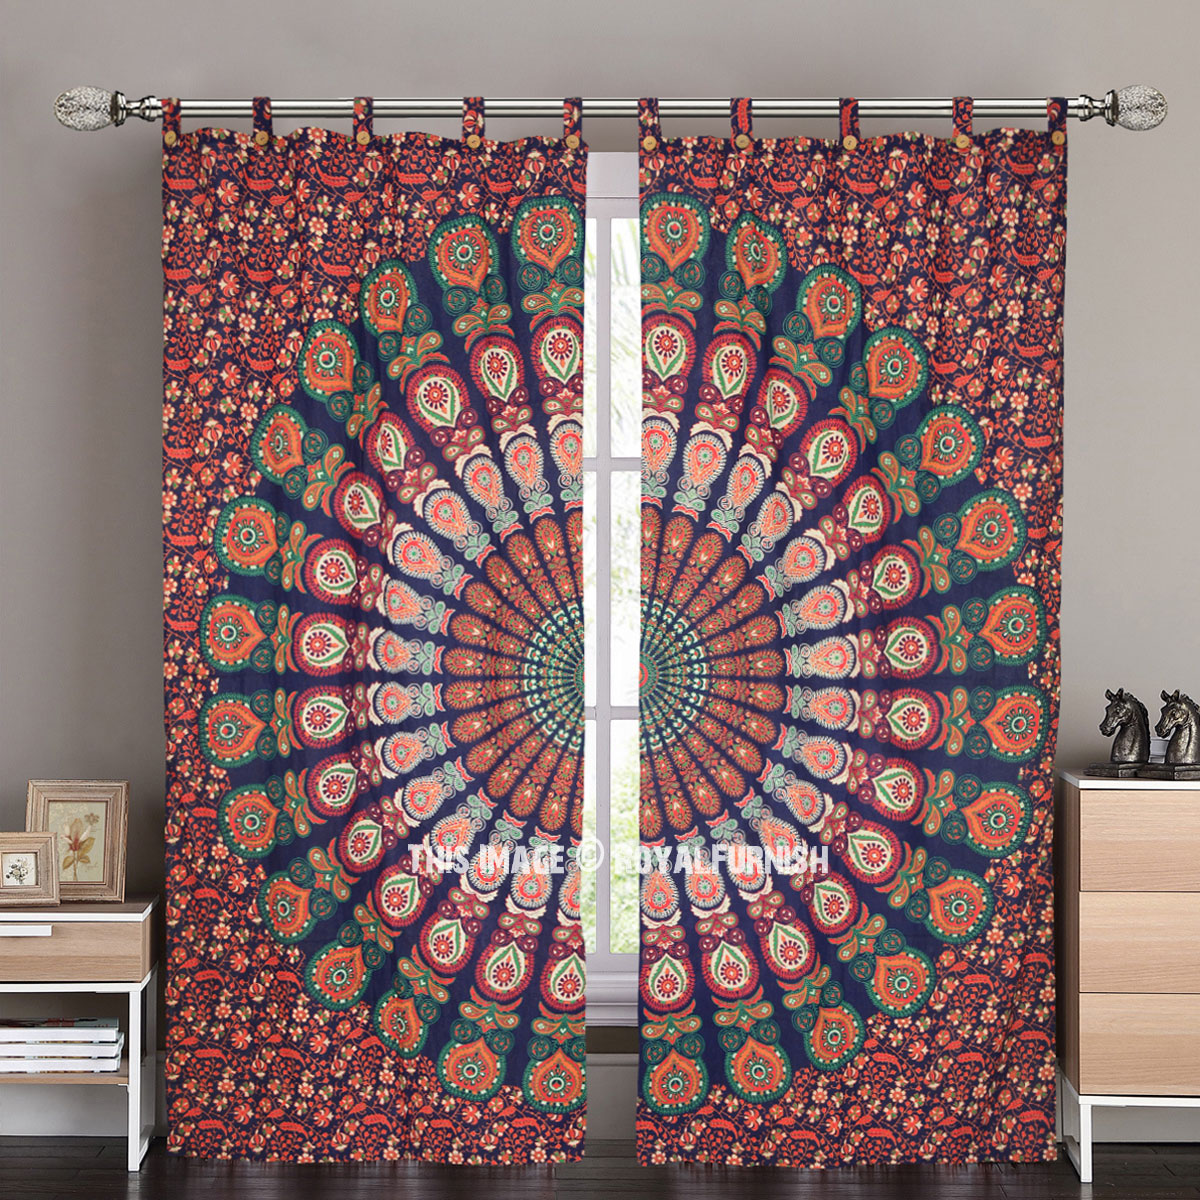 Tapestry Wall Hanging Bohemian Valances Decor Art Indian Curtains Hippie Mandala